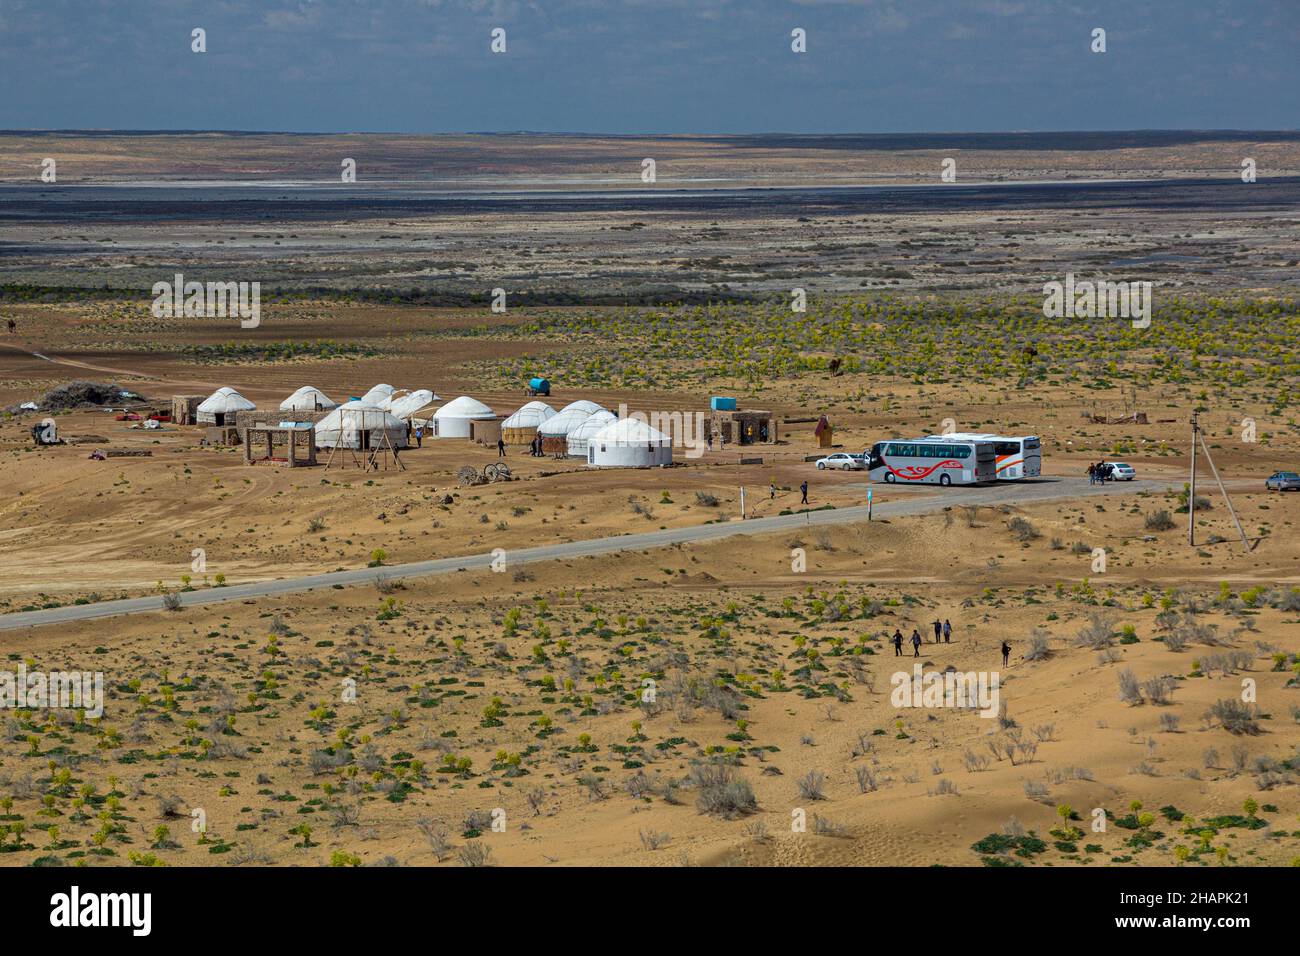 AYAZ QALA, UZBEKISTAN - APRIL 24, 2018: Yurt camp near Ayaz Qala fortress in Kyzylkum desert, Uzbekistan Stock Photo